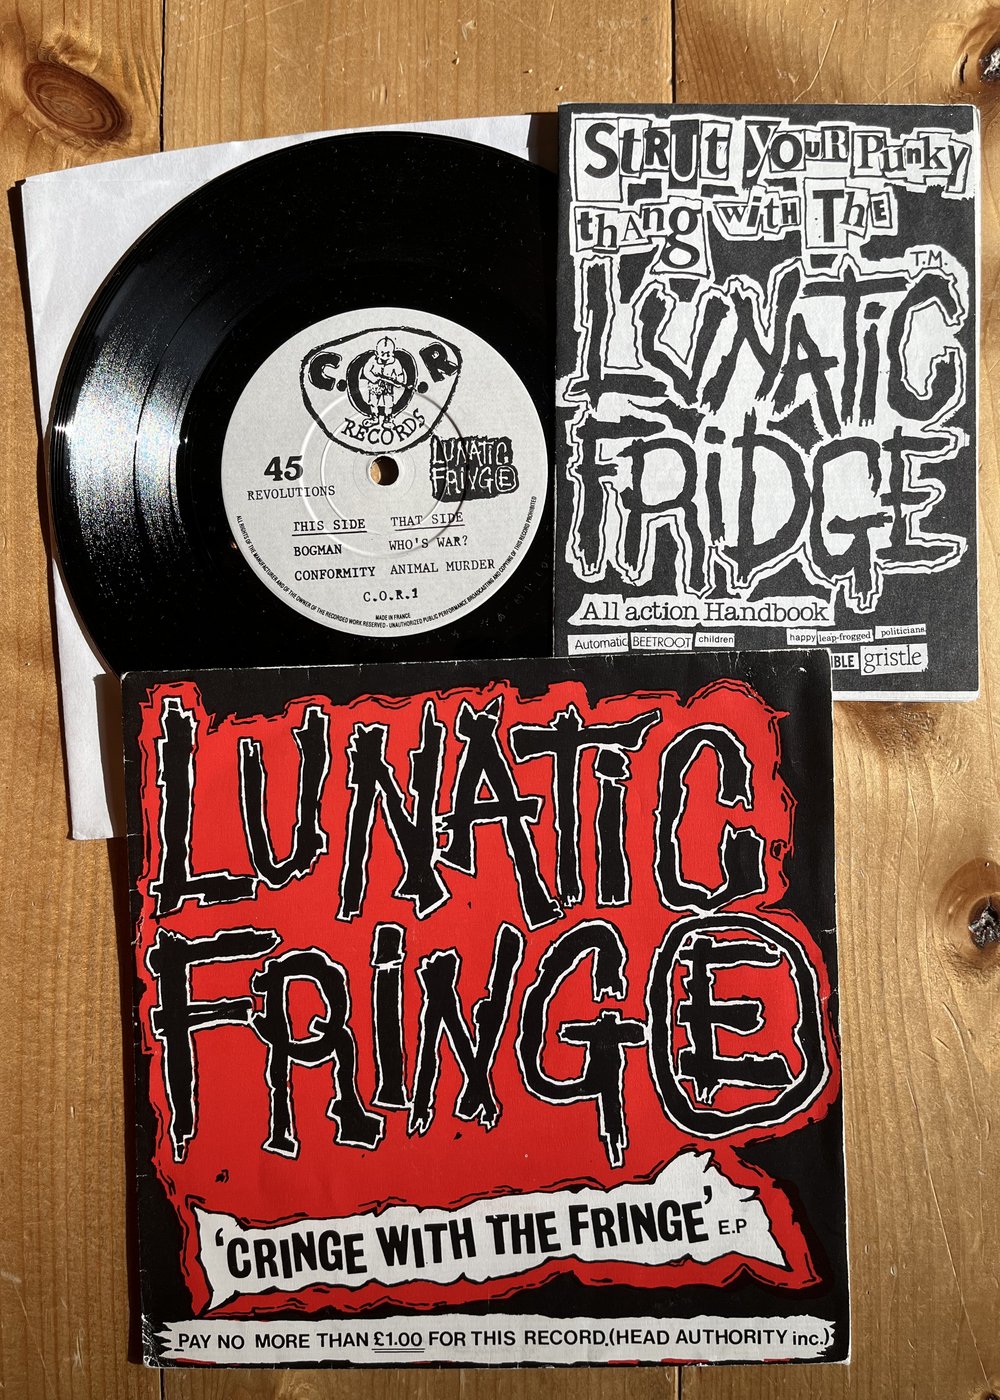 Lunatic Fringe - Cringe With The Fringe EP side A.jpeg